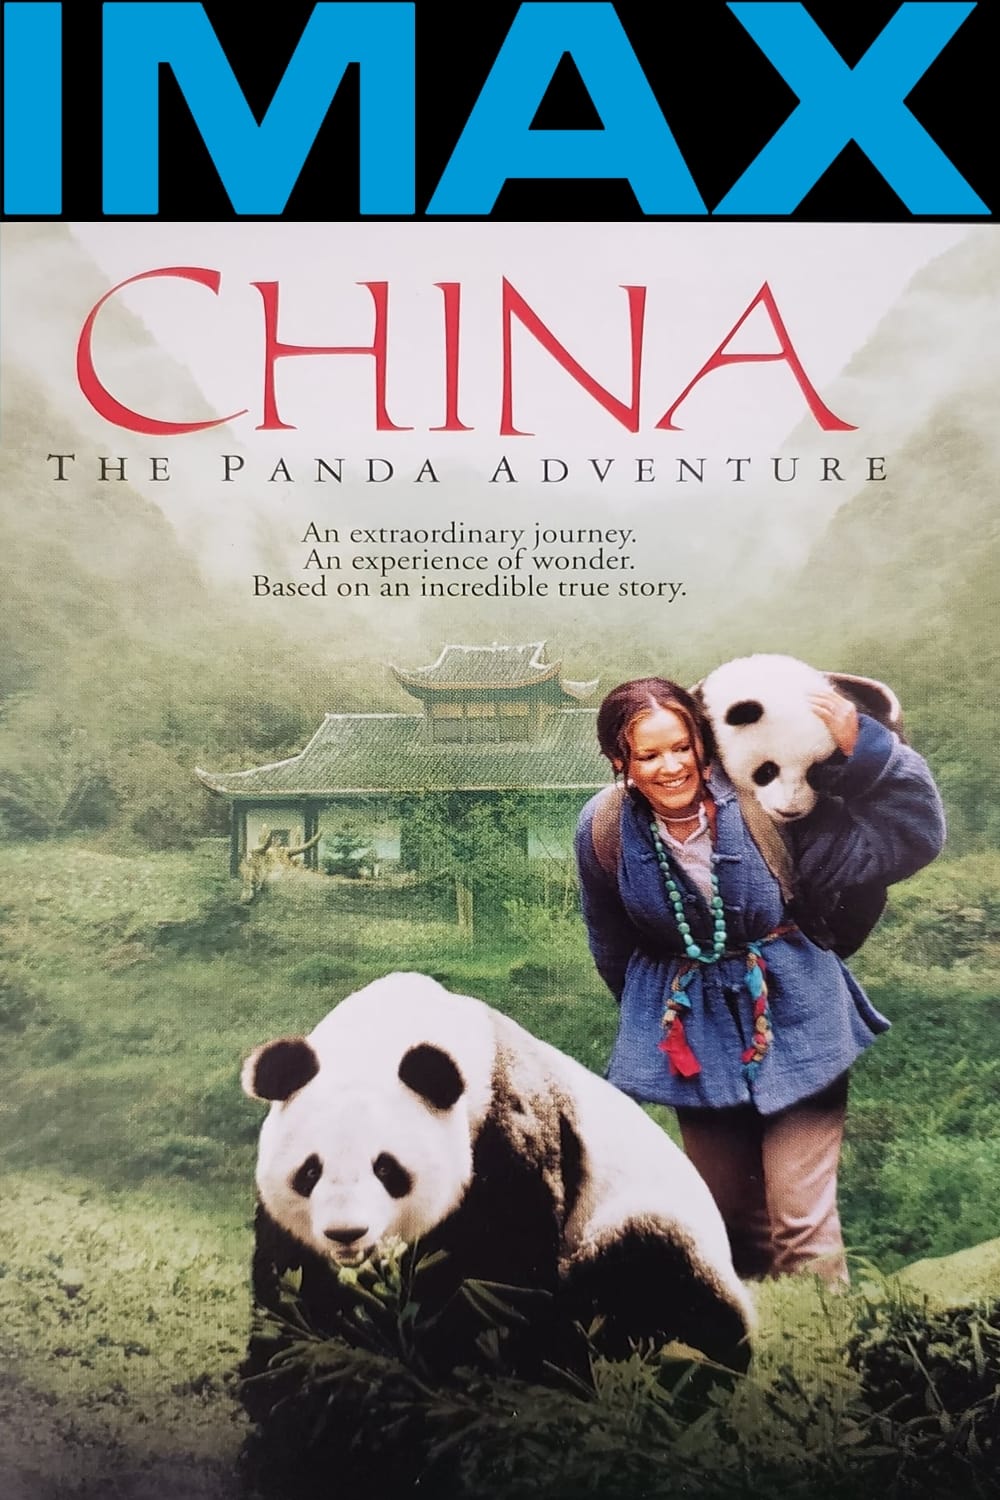 China: The Panda Adventure (2001)